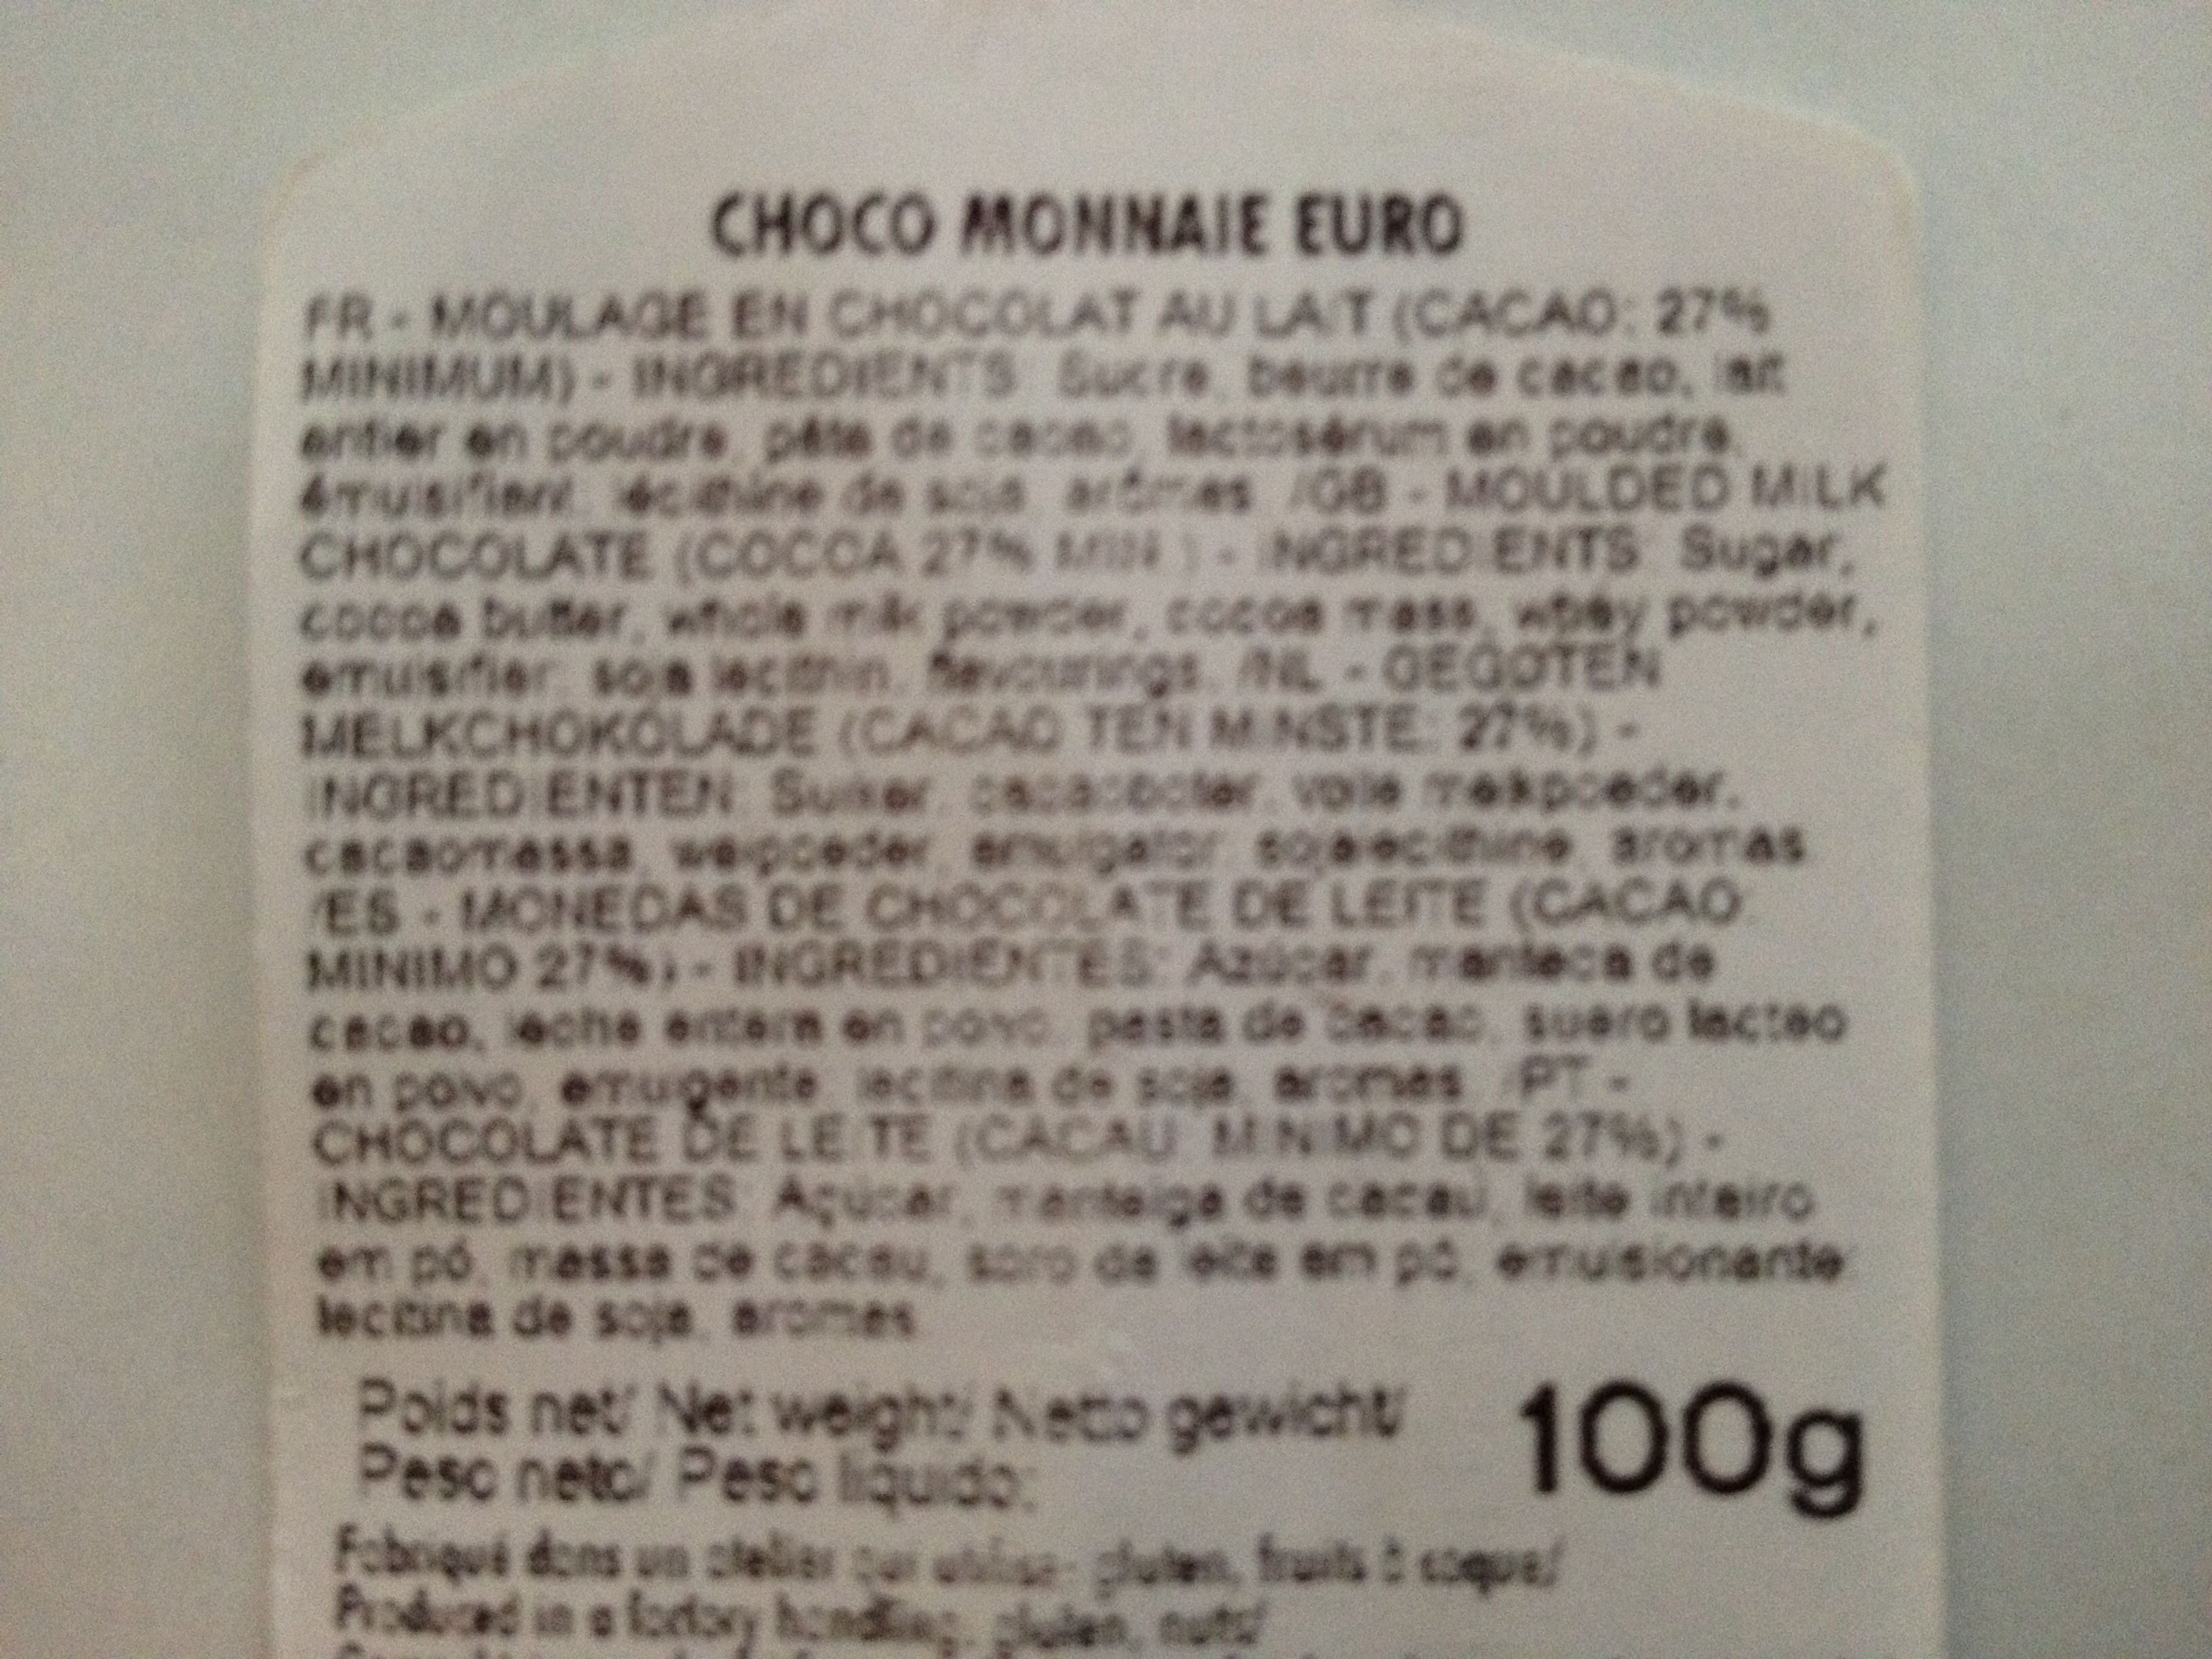 Choco monnaie euro - Ingredients - fr